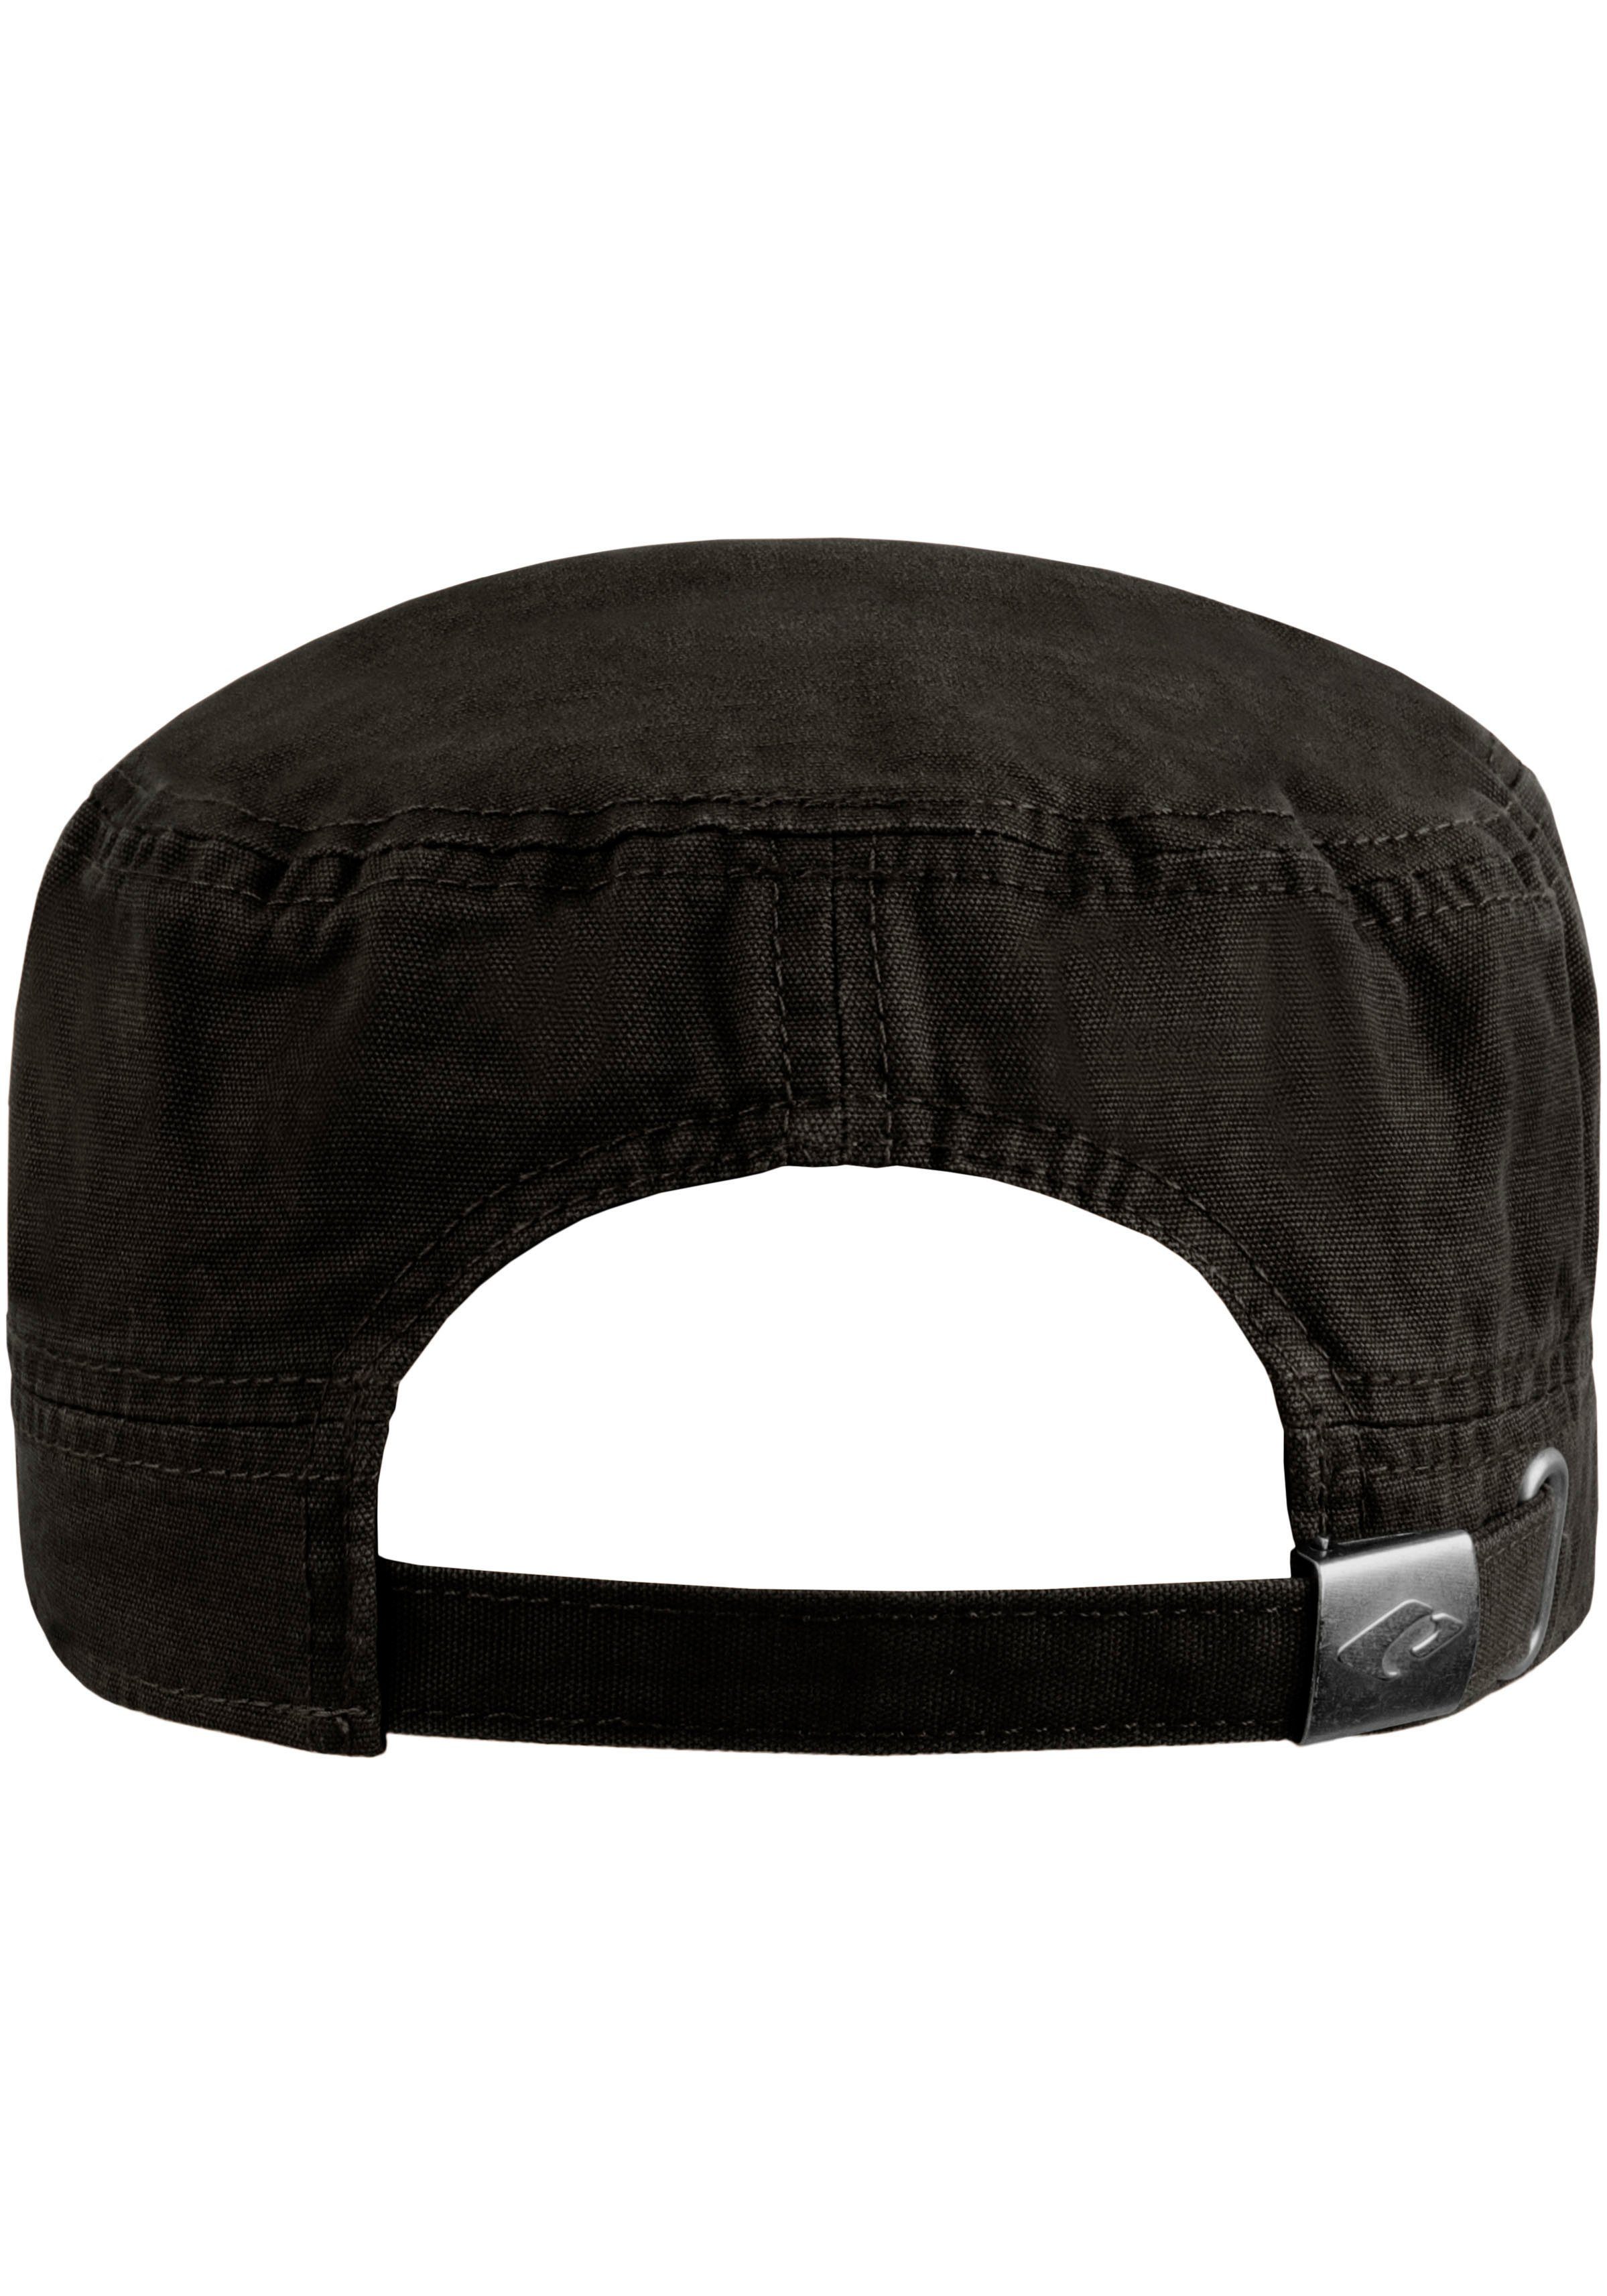 Mililtary-Style Army schwarz Dublin im Hat Cap Cap chillouts